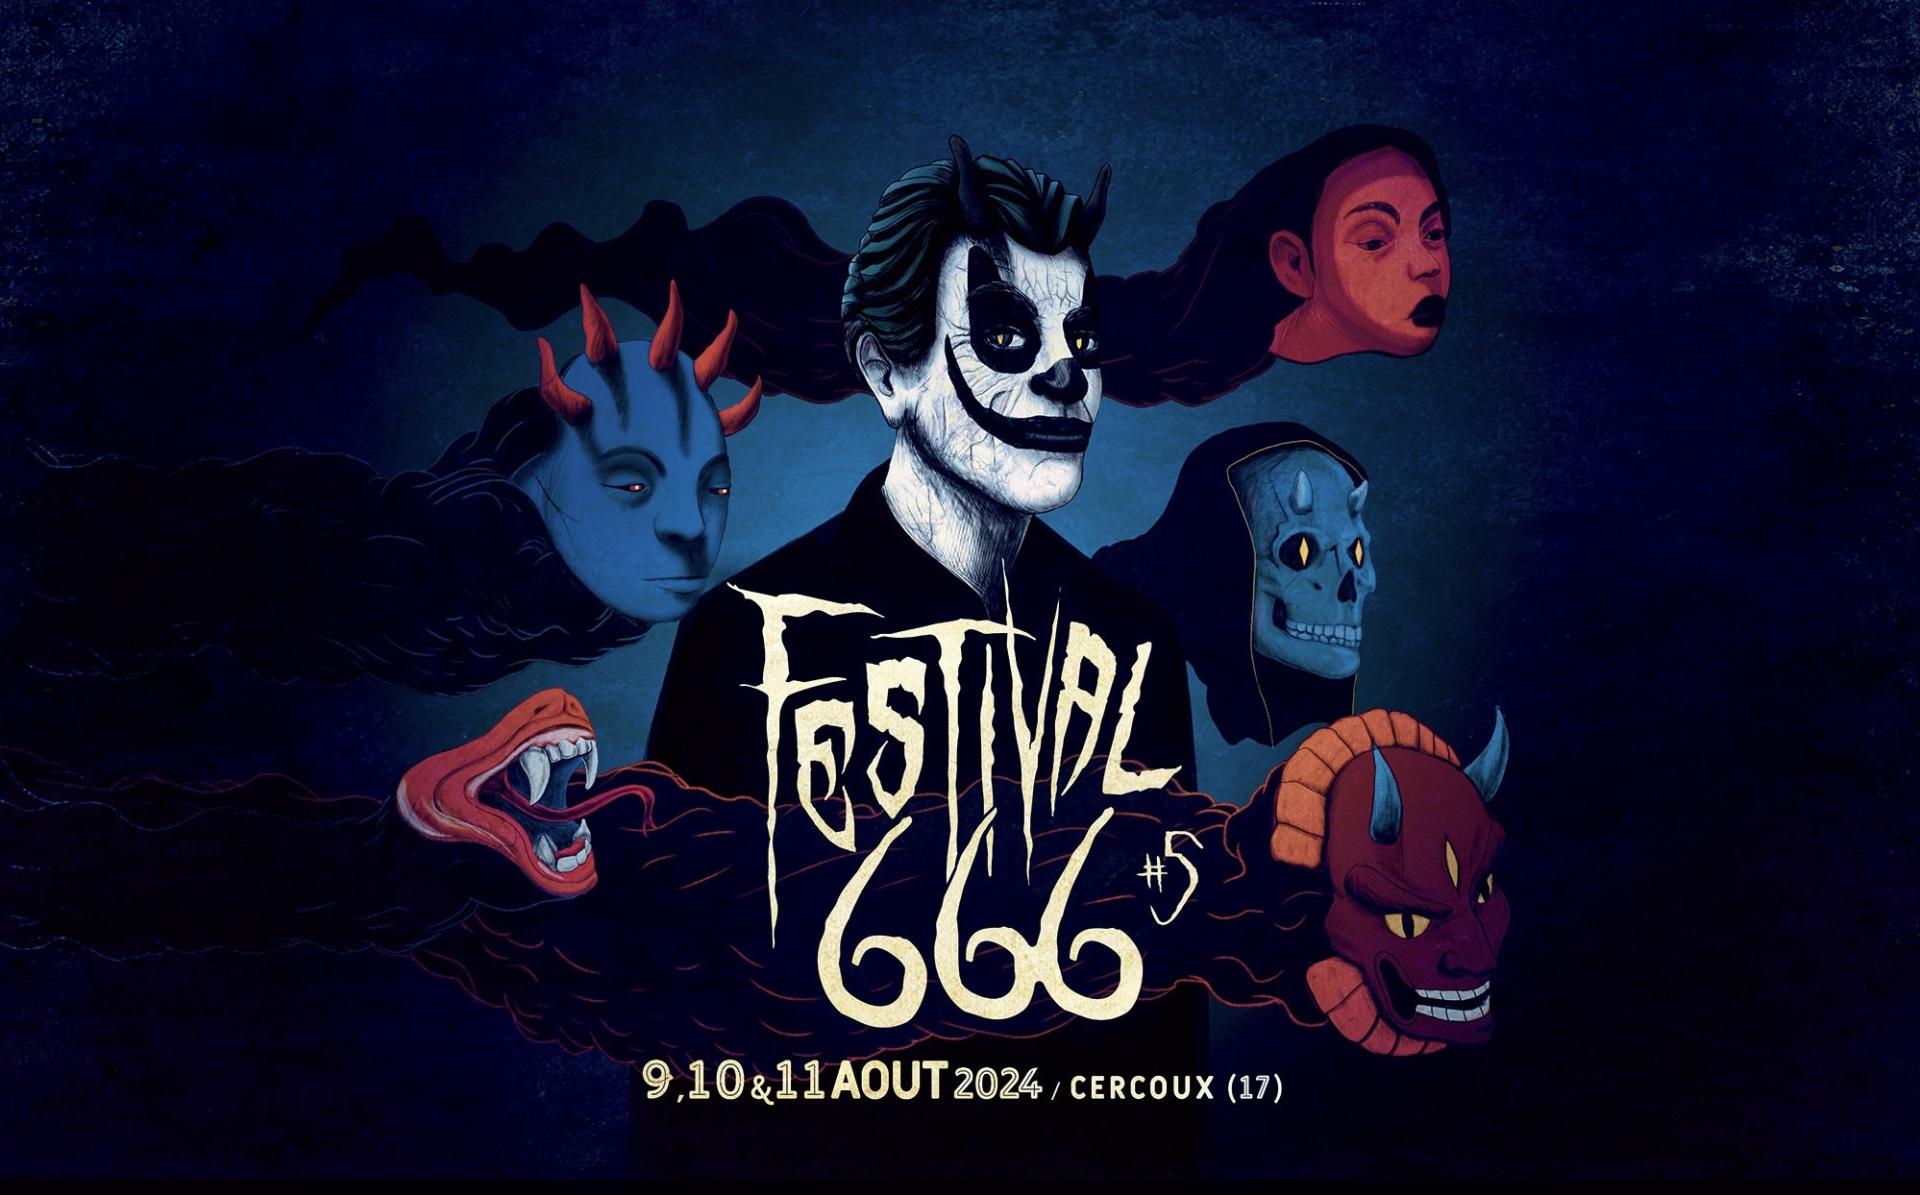 Festival 666 ban